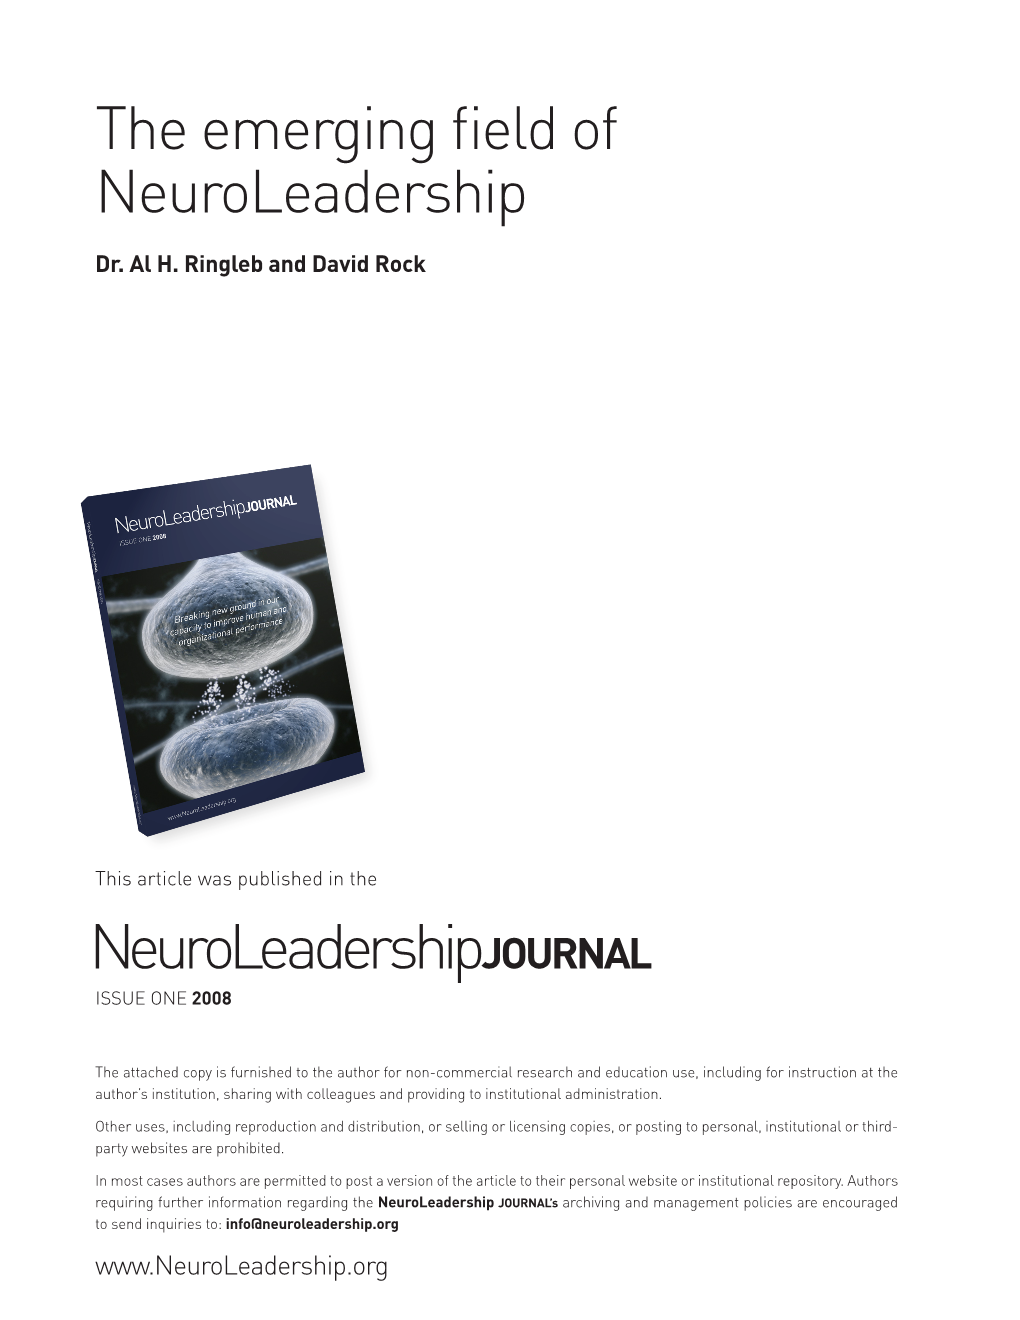 Neuroleadershipjournal Issue One 2008